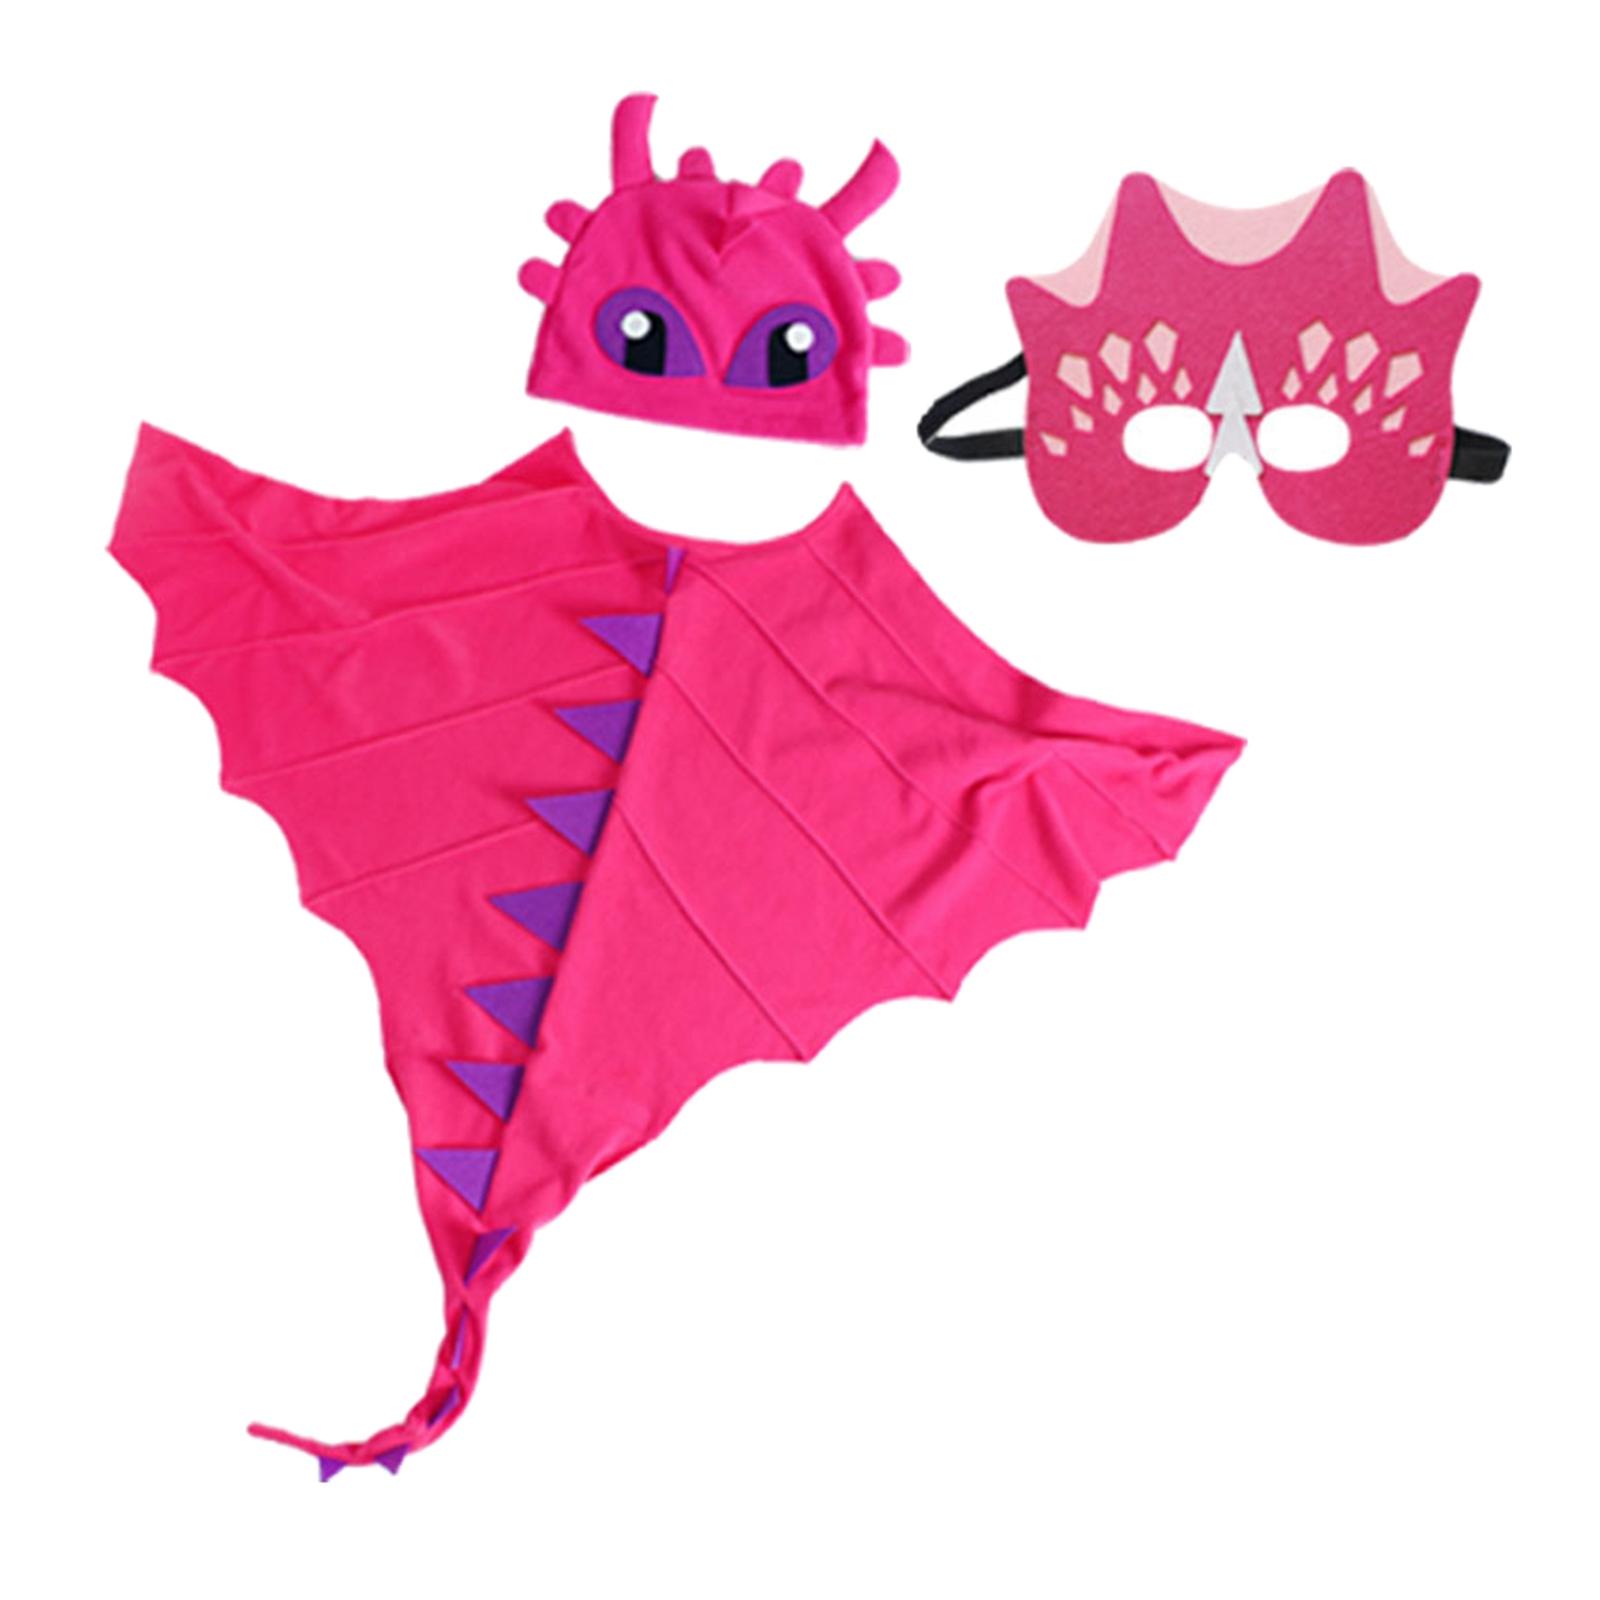 Toothless Dragon Costume Dinosaur Cape Child Costume Dragon Dress Up Girls Boys Toys Halloween for Birthday 1 - Toothless Plush